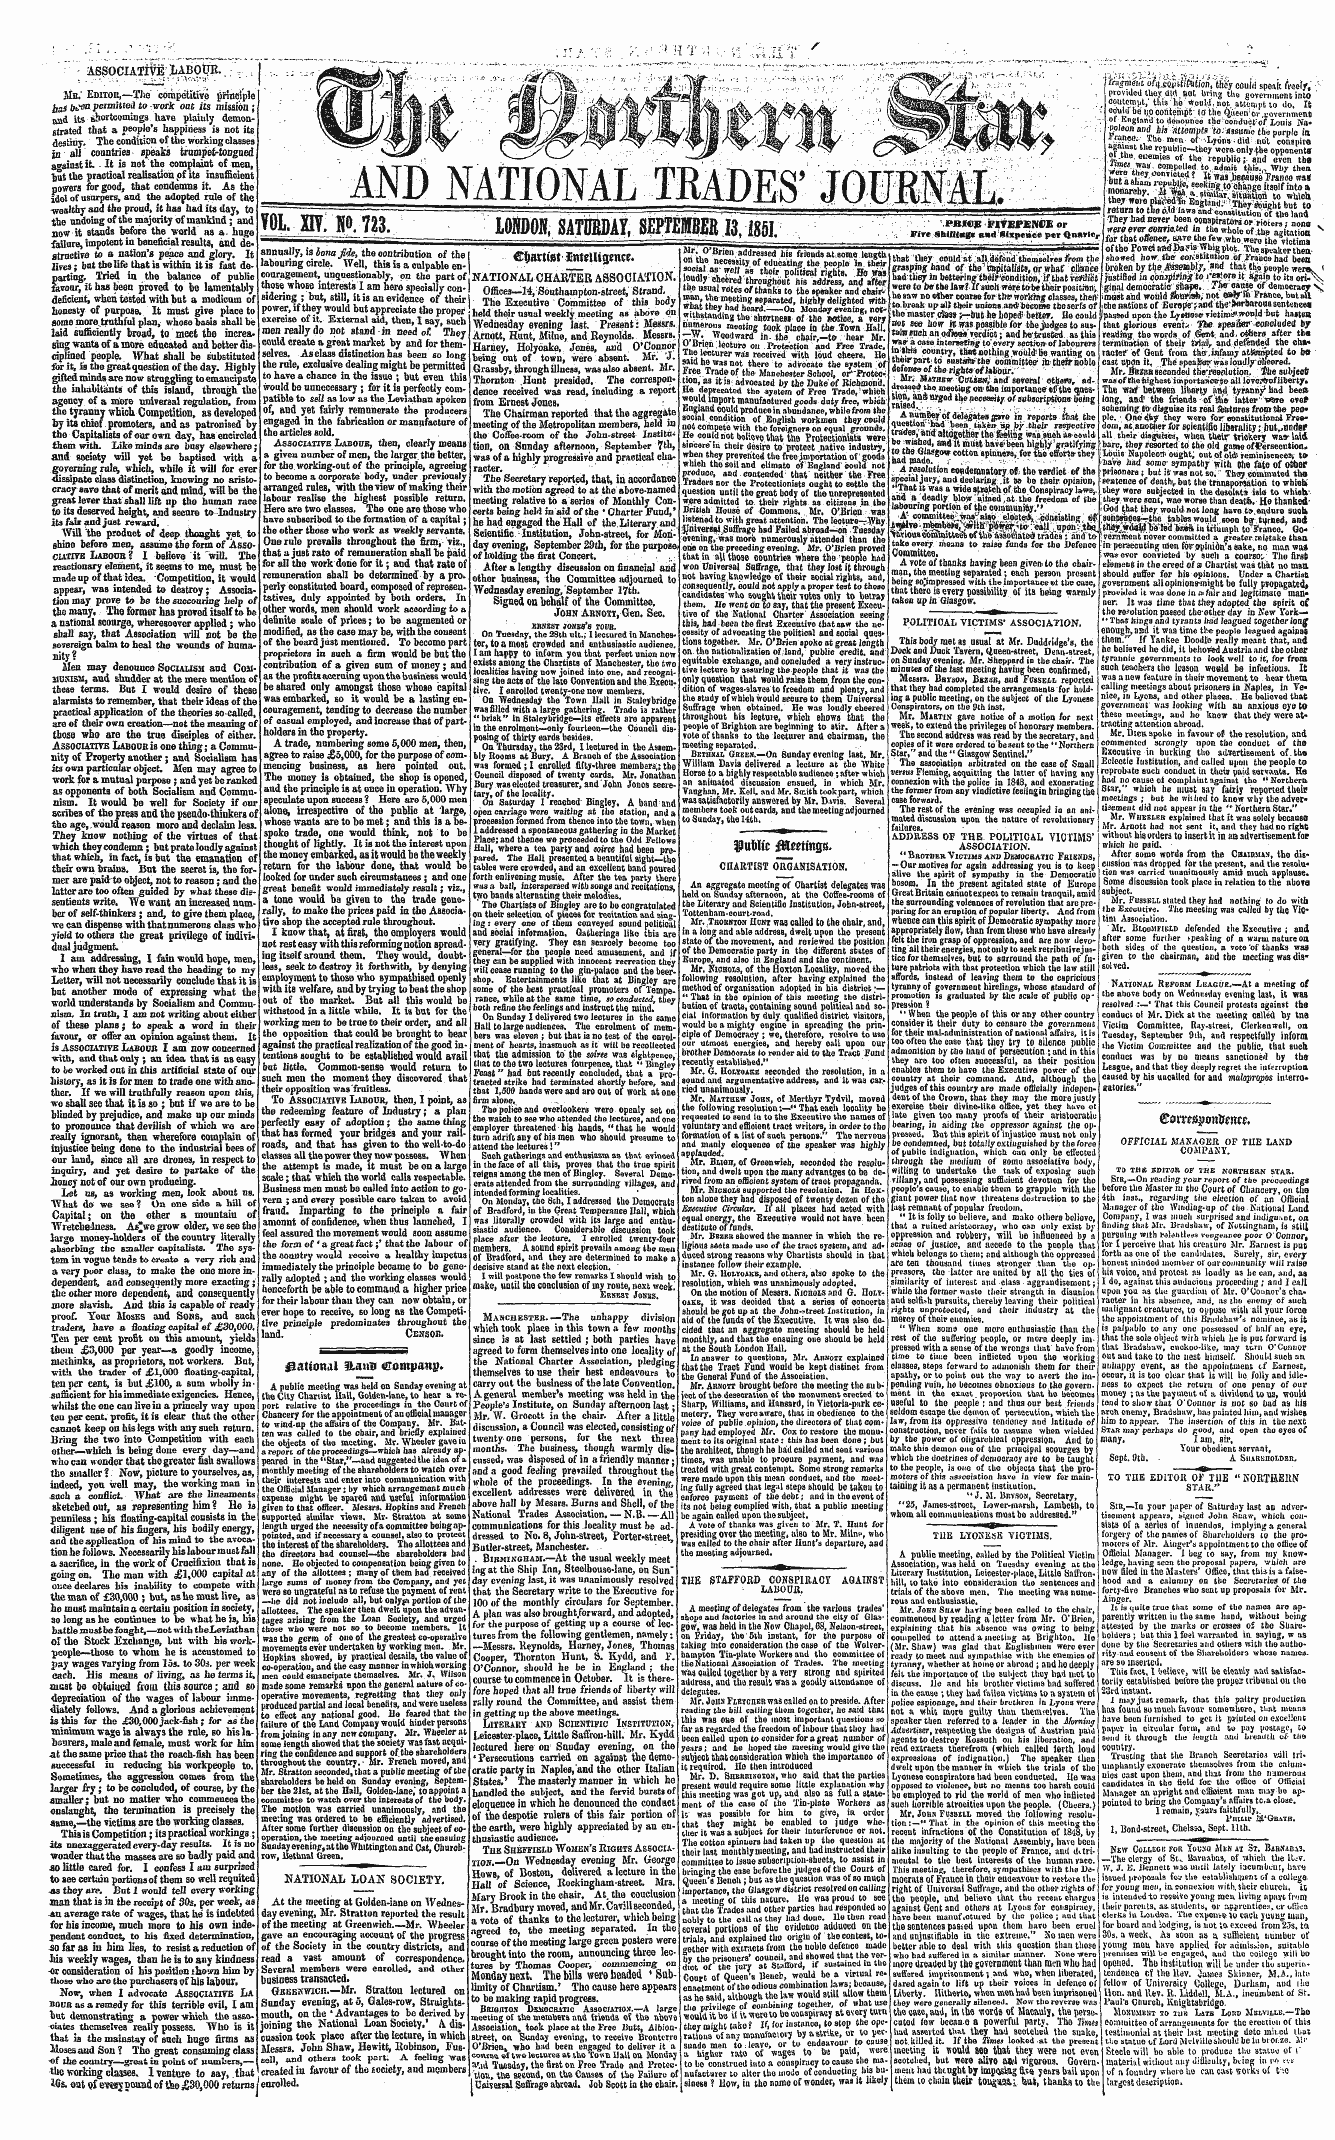 Northern Star (1837-1852): jS F Y, 2nd edition - Yol. Hv. P.7z3.,. - Imw Sat1jmy, Septewb...